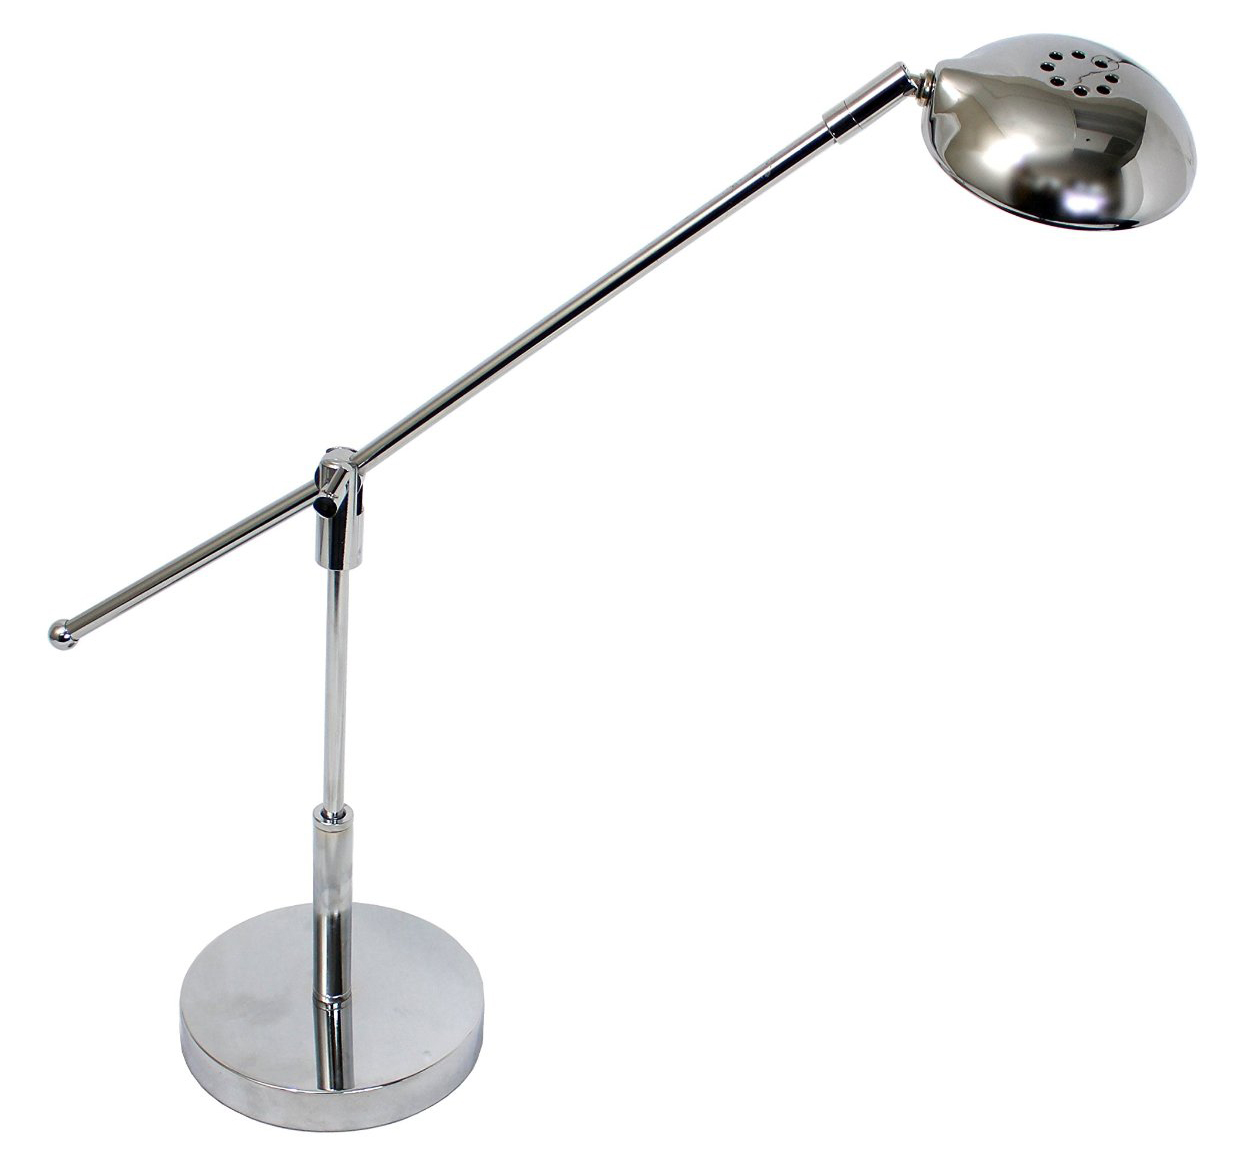 Simple Designs 3W Balance Arm LED Desk Lamp with Swivel Head